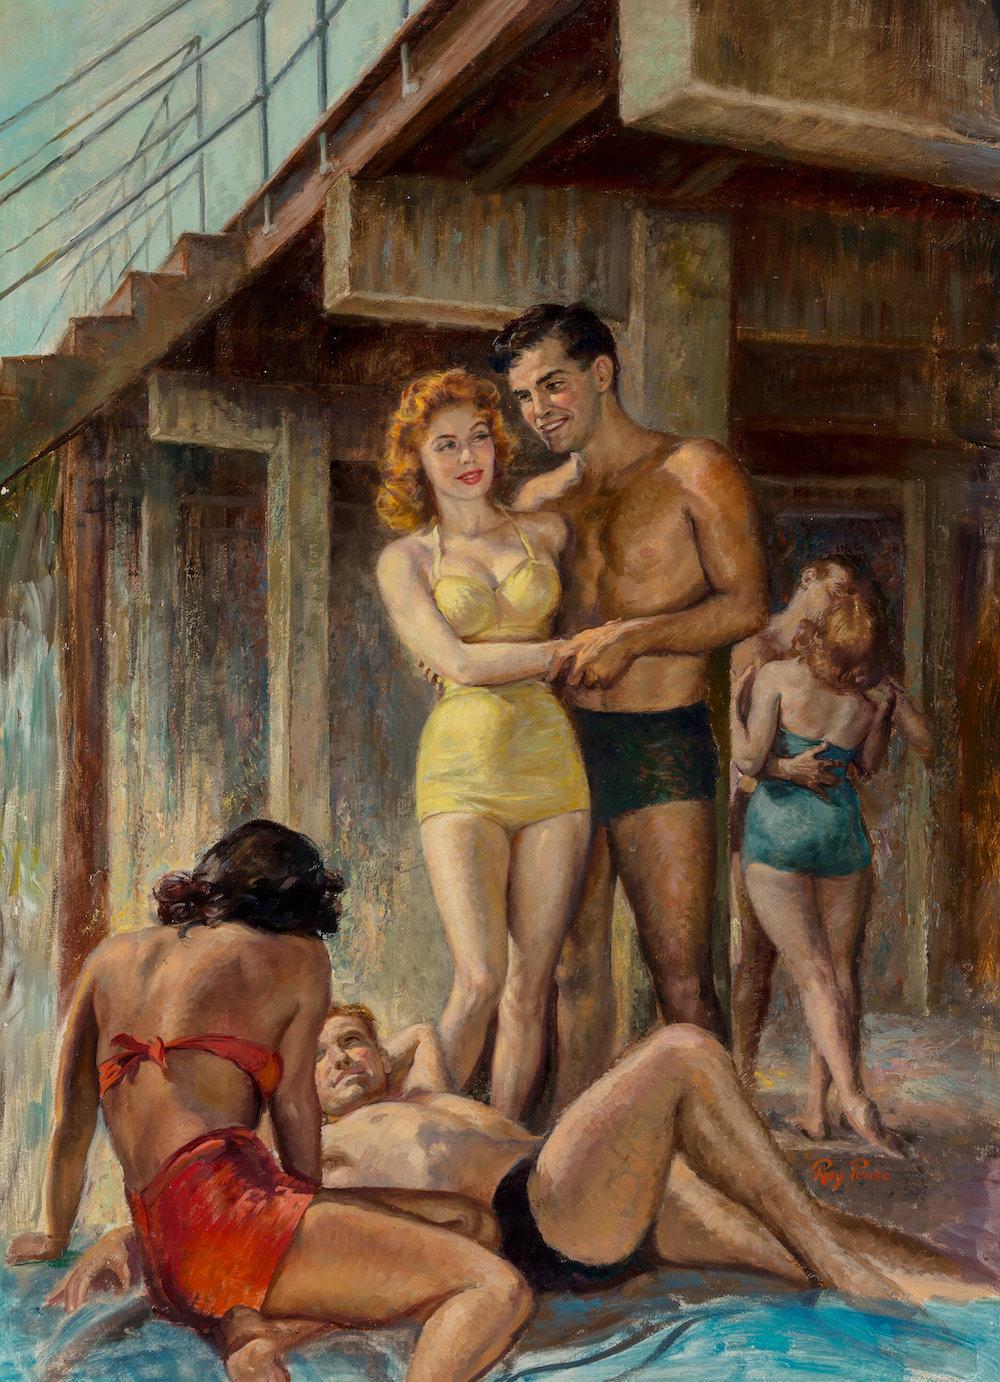 Raymond Pease's Beach Girl paperback cover, 1952